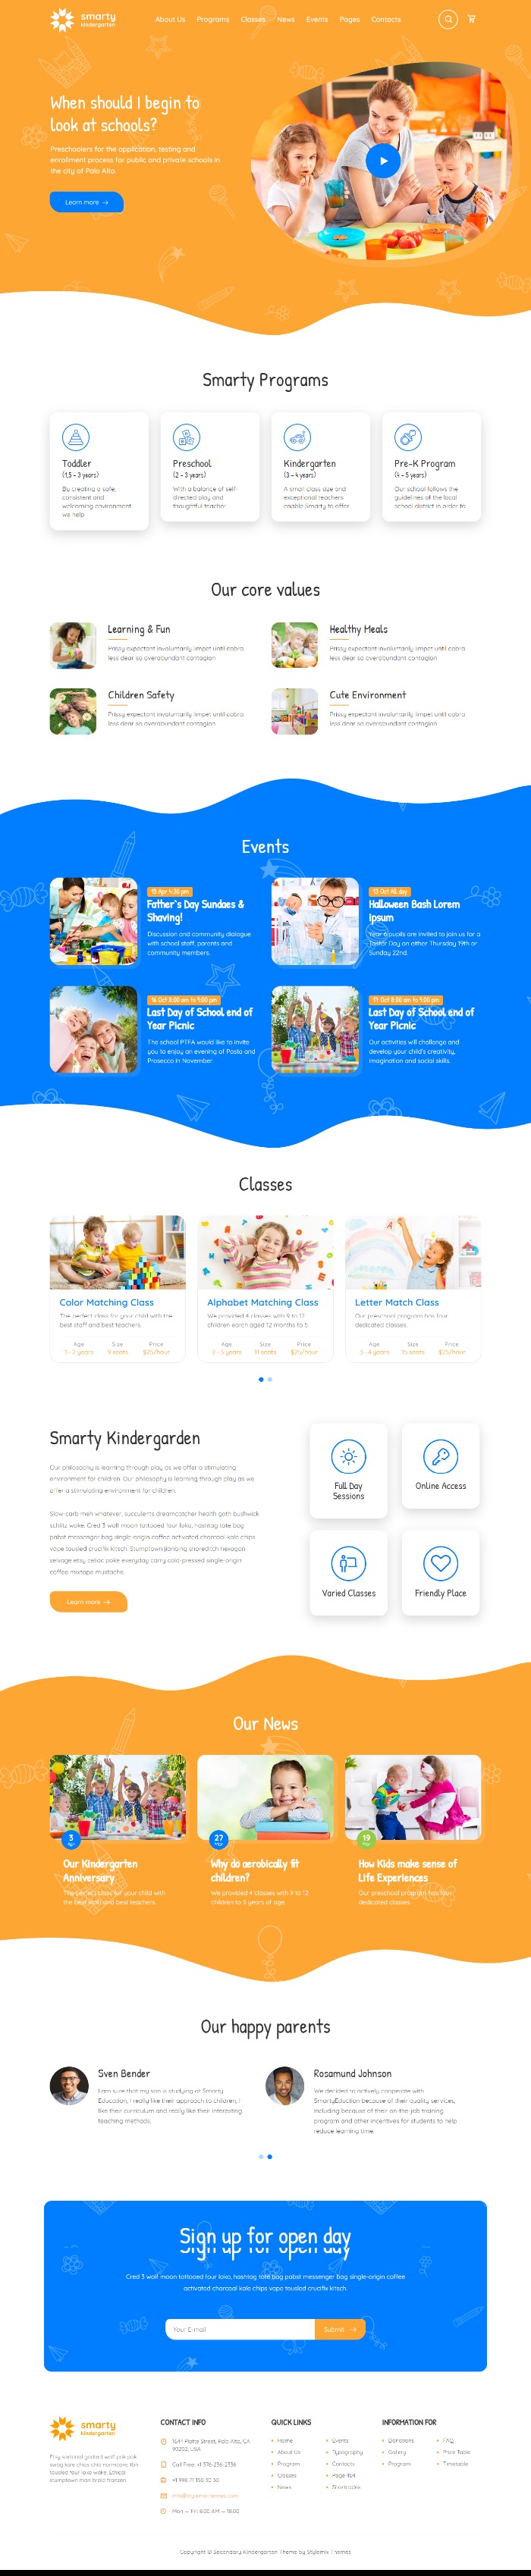 Mẫu website giáo dục - Smarty Kindergarten